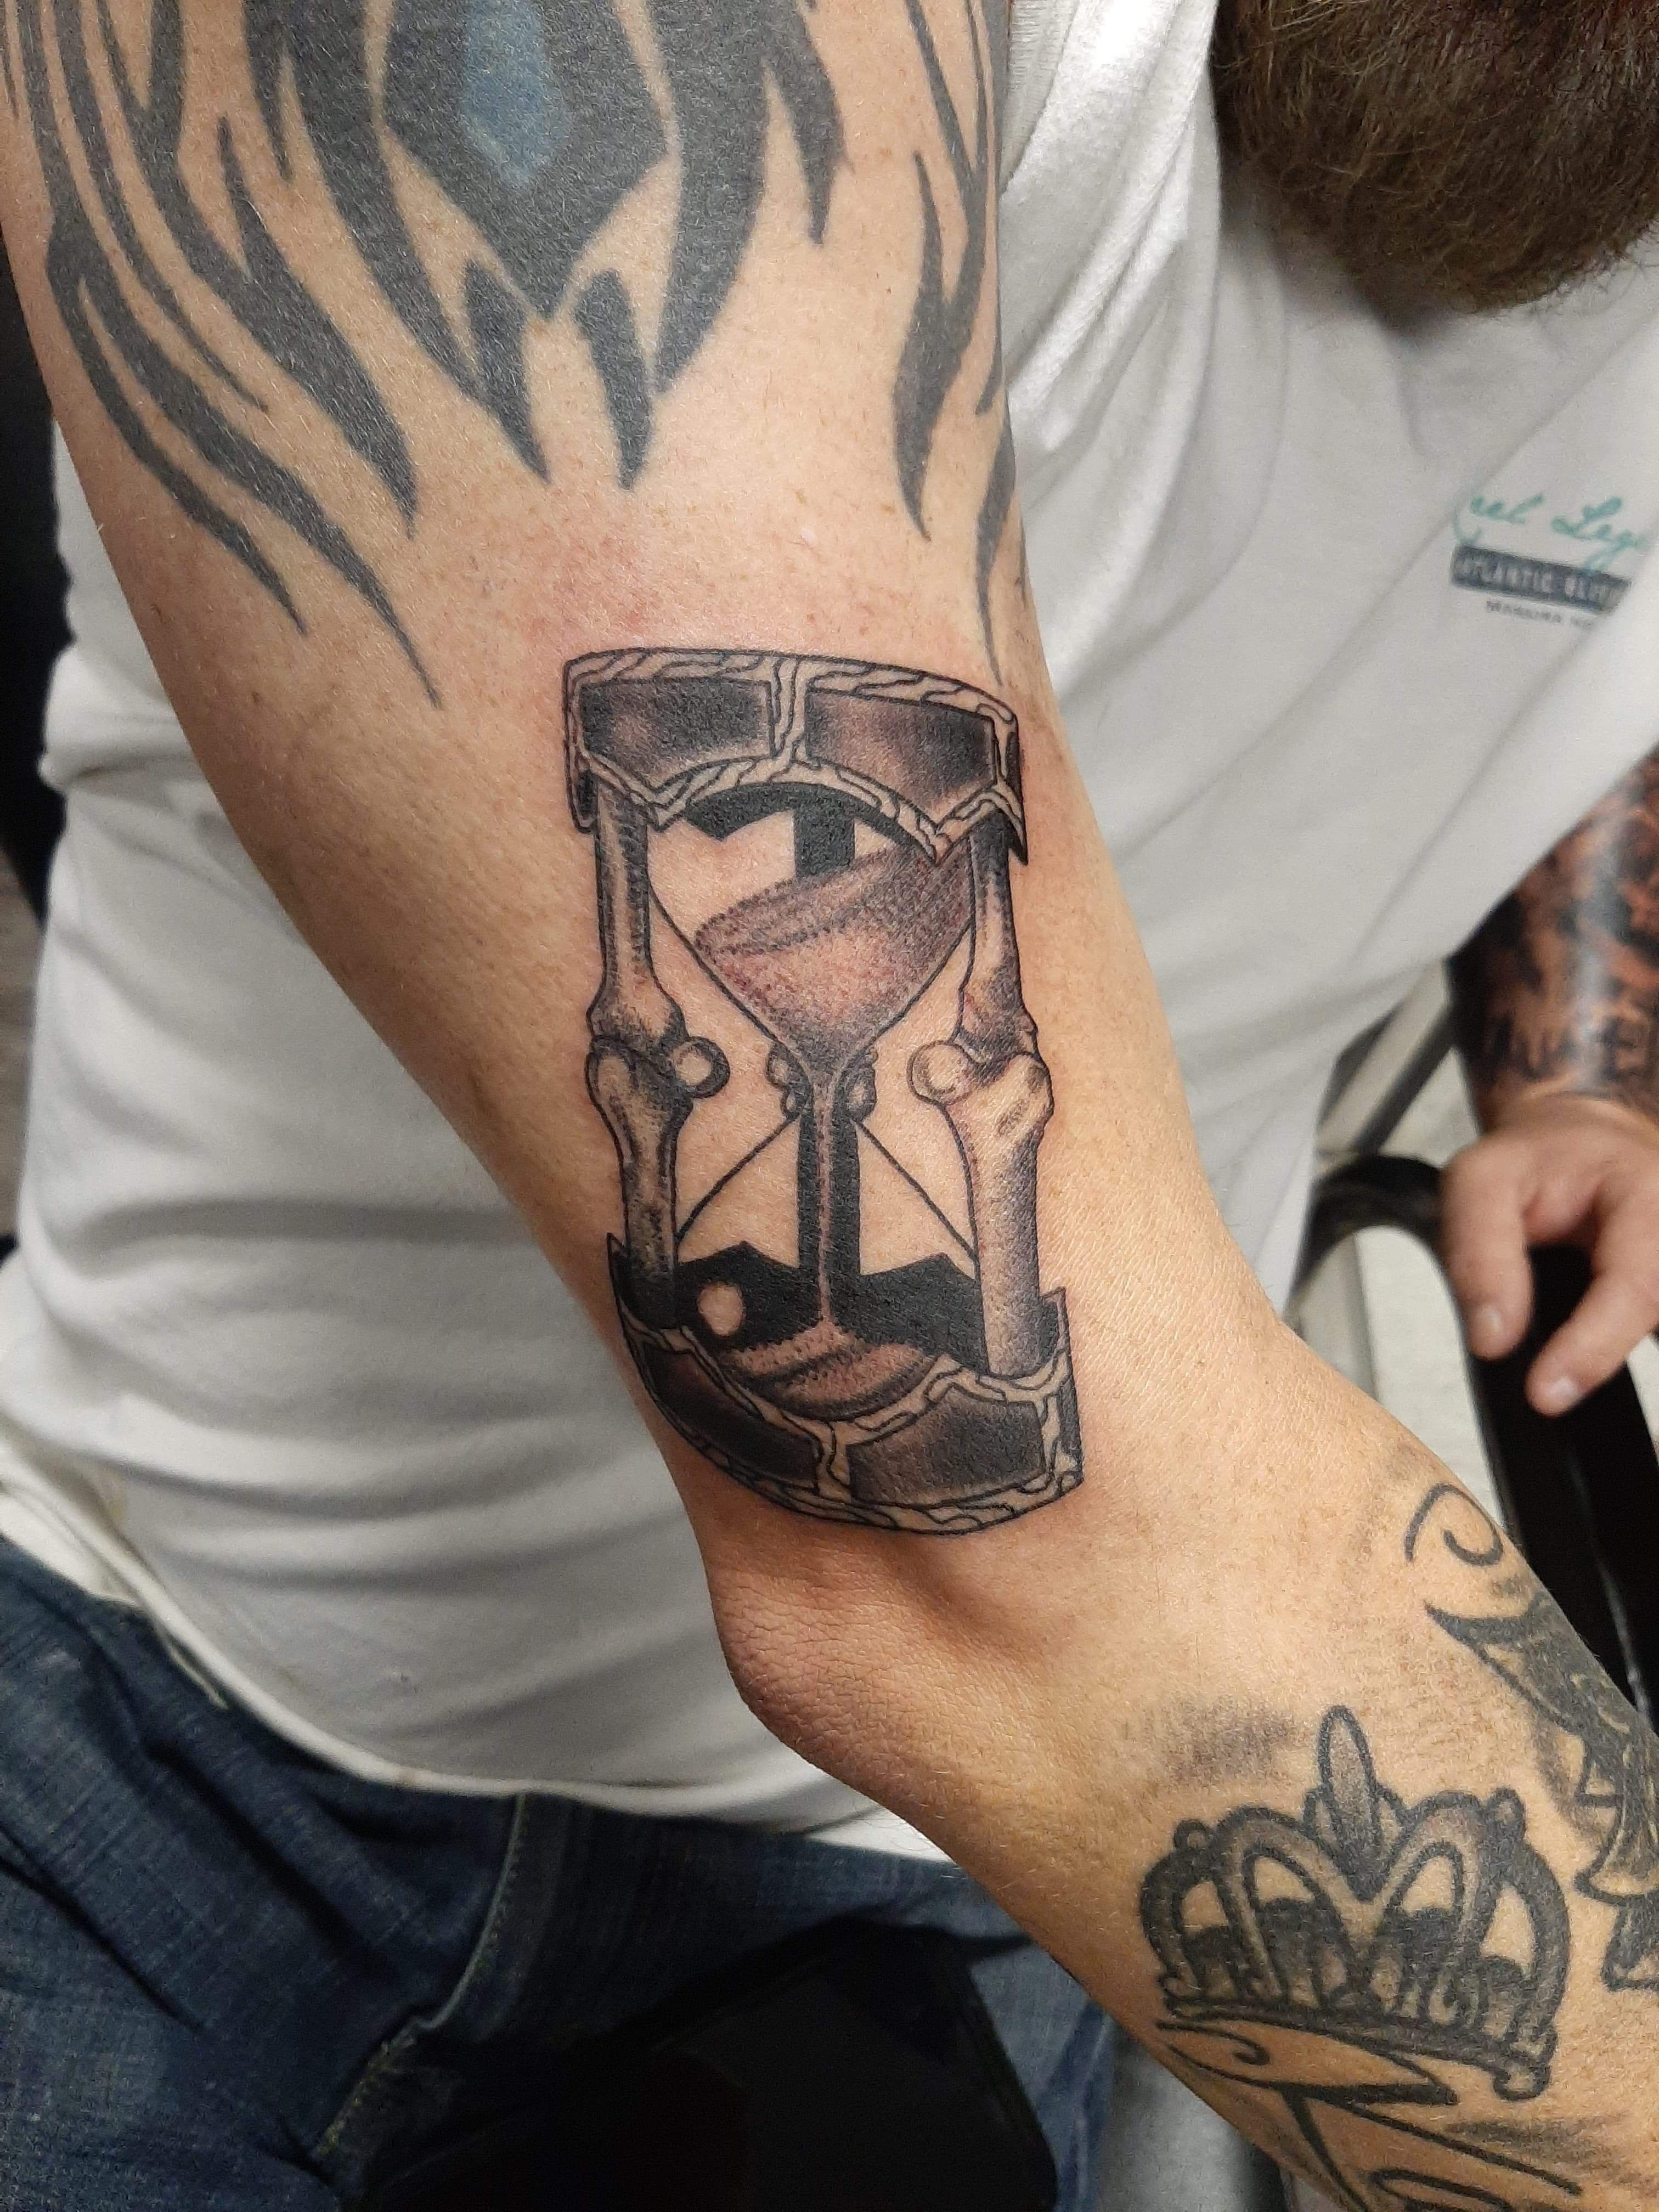 Where Does A Tattoo Artist Start-Matt Phillips | by Easton English | Medium